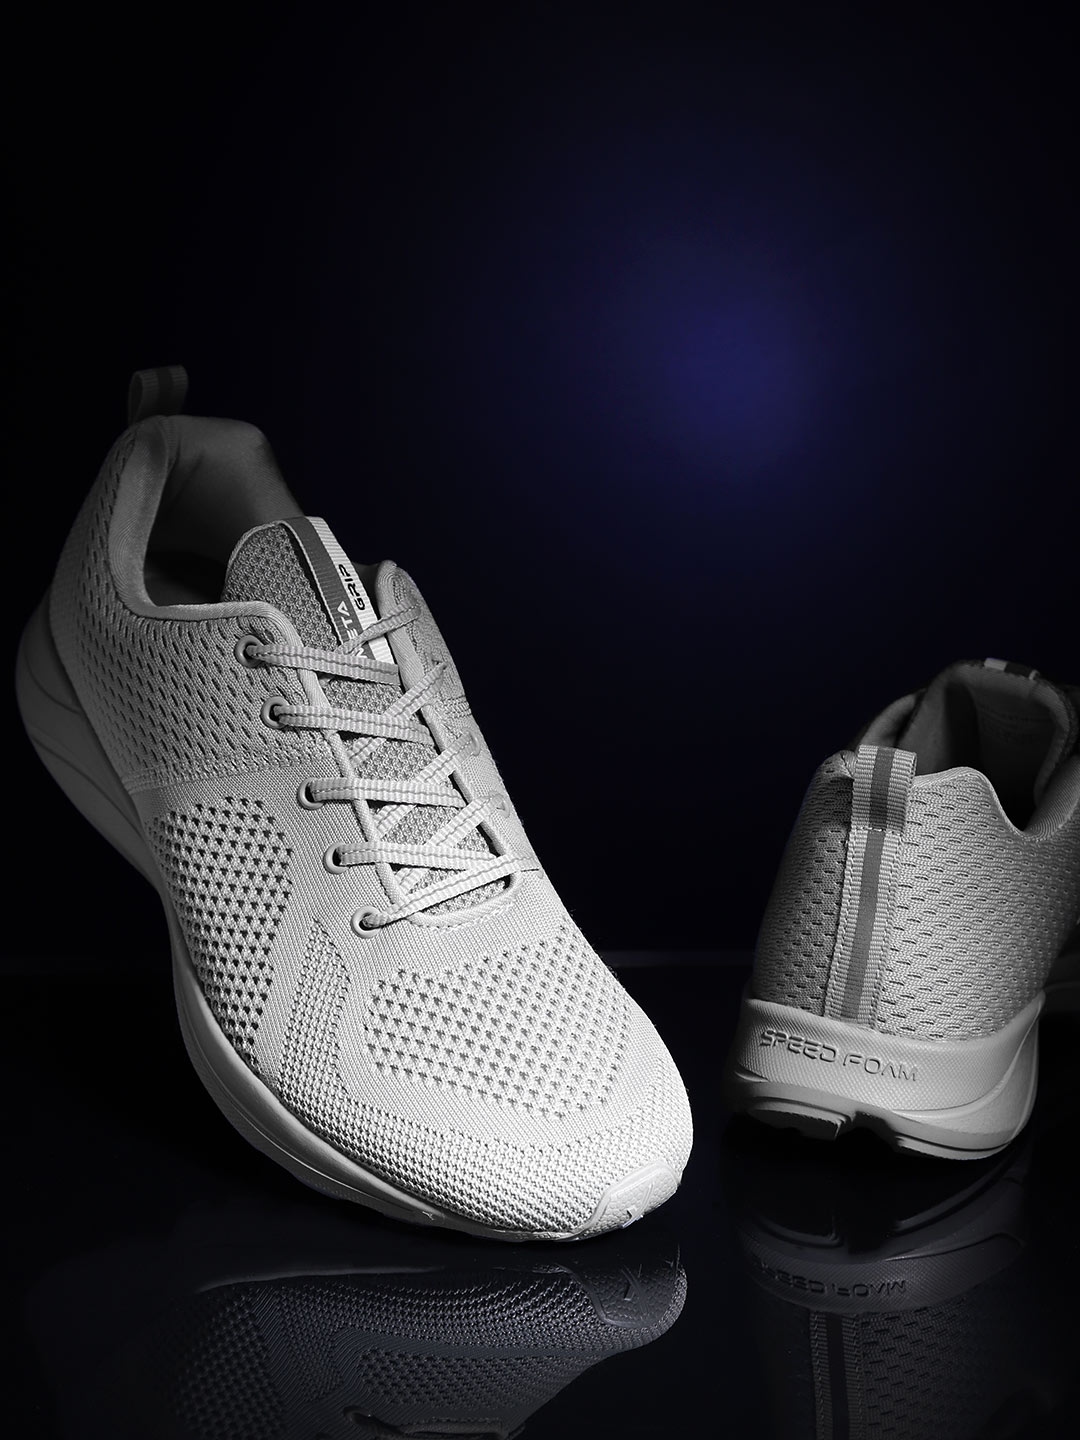 hrx grey running shoes